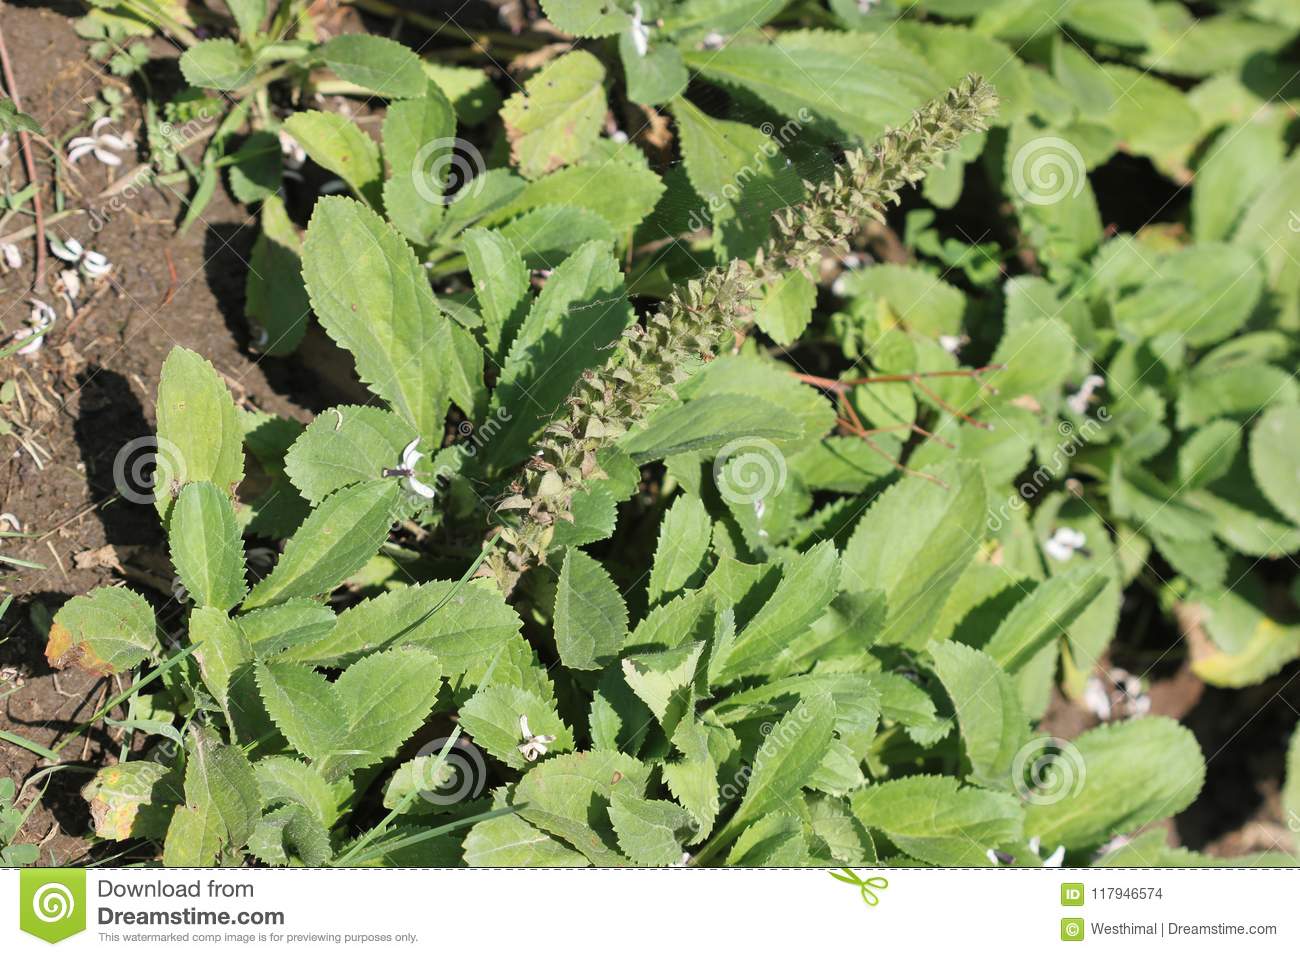 kankola  : Picrorhiza kurroa Royle ex Benth., Picrorrhiza scrophulariiflora Pennell 